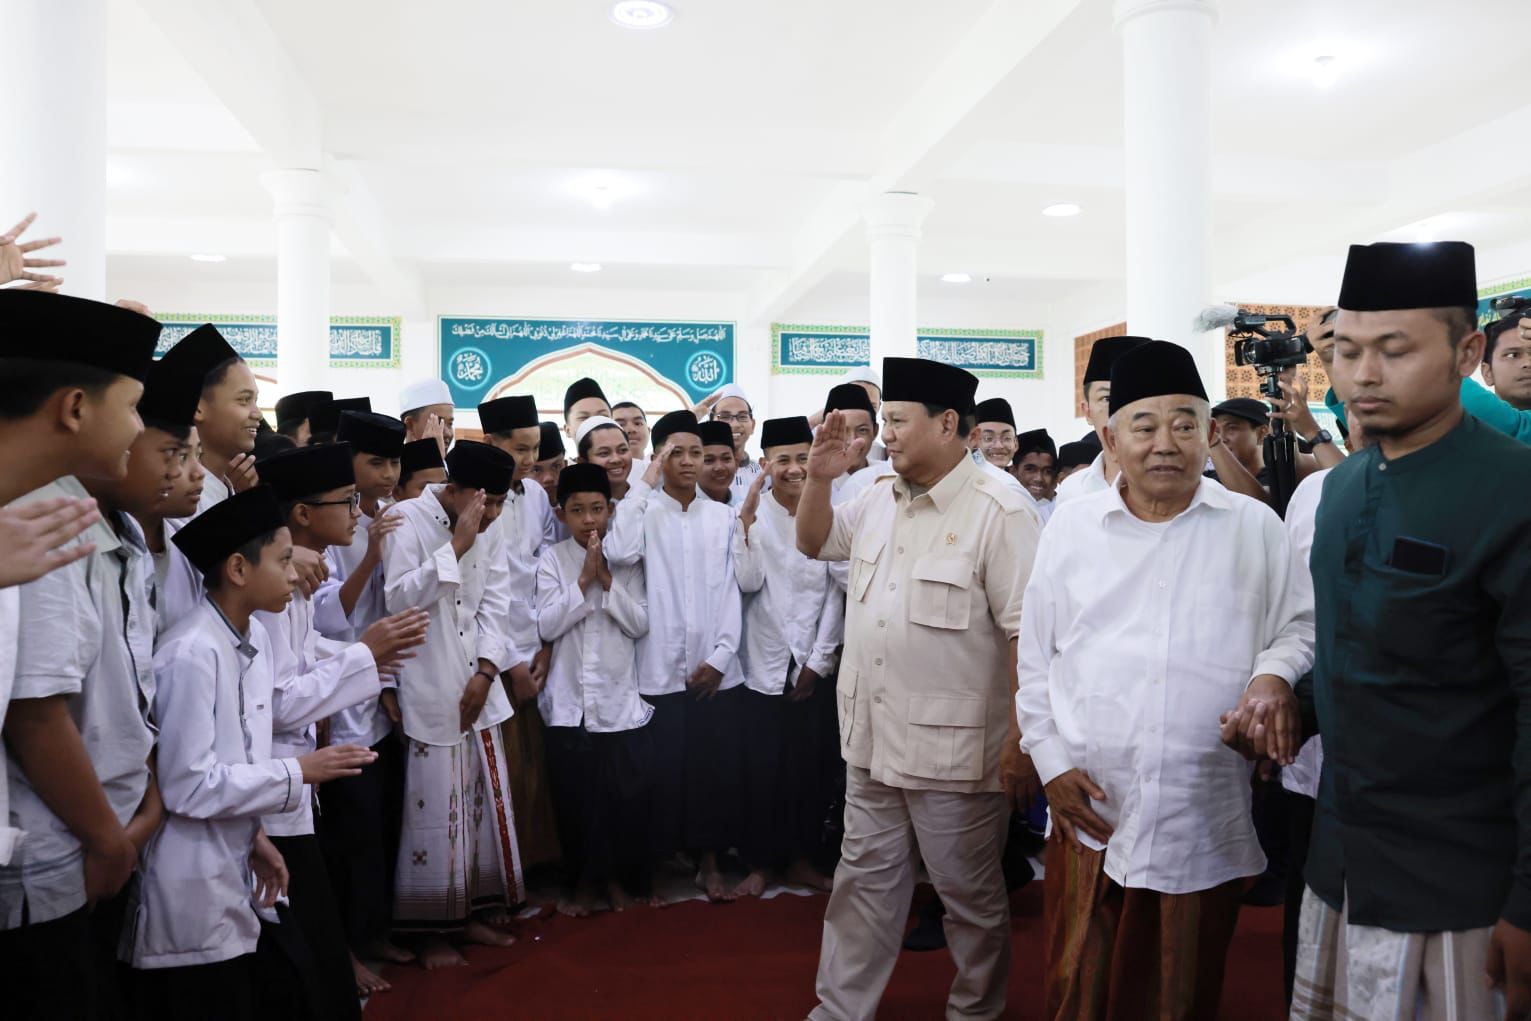 Kedekatan Prabowo dengan para santri (Sinpo.id/Tim Media)